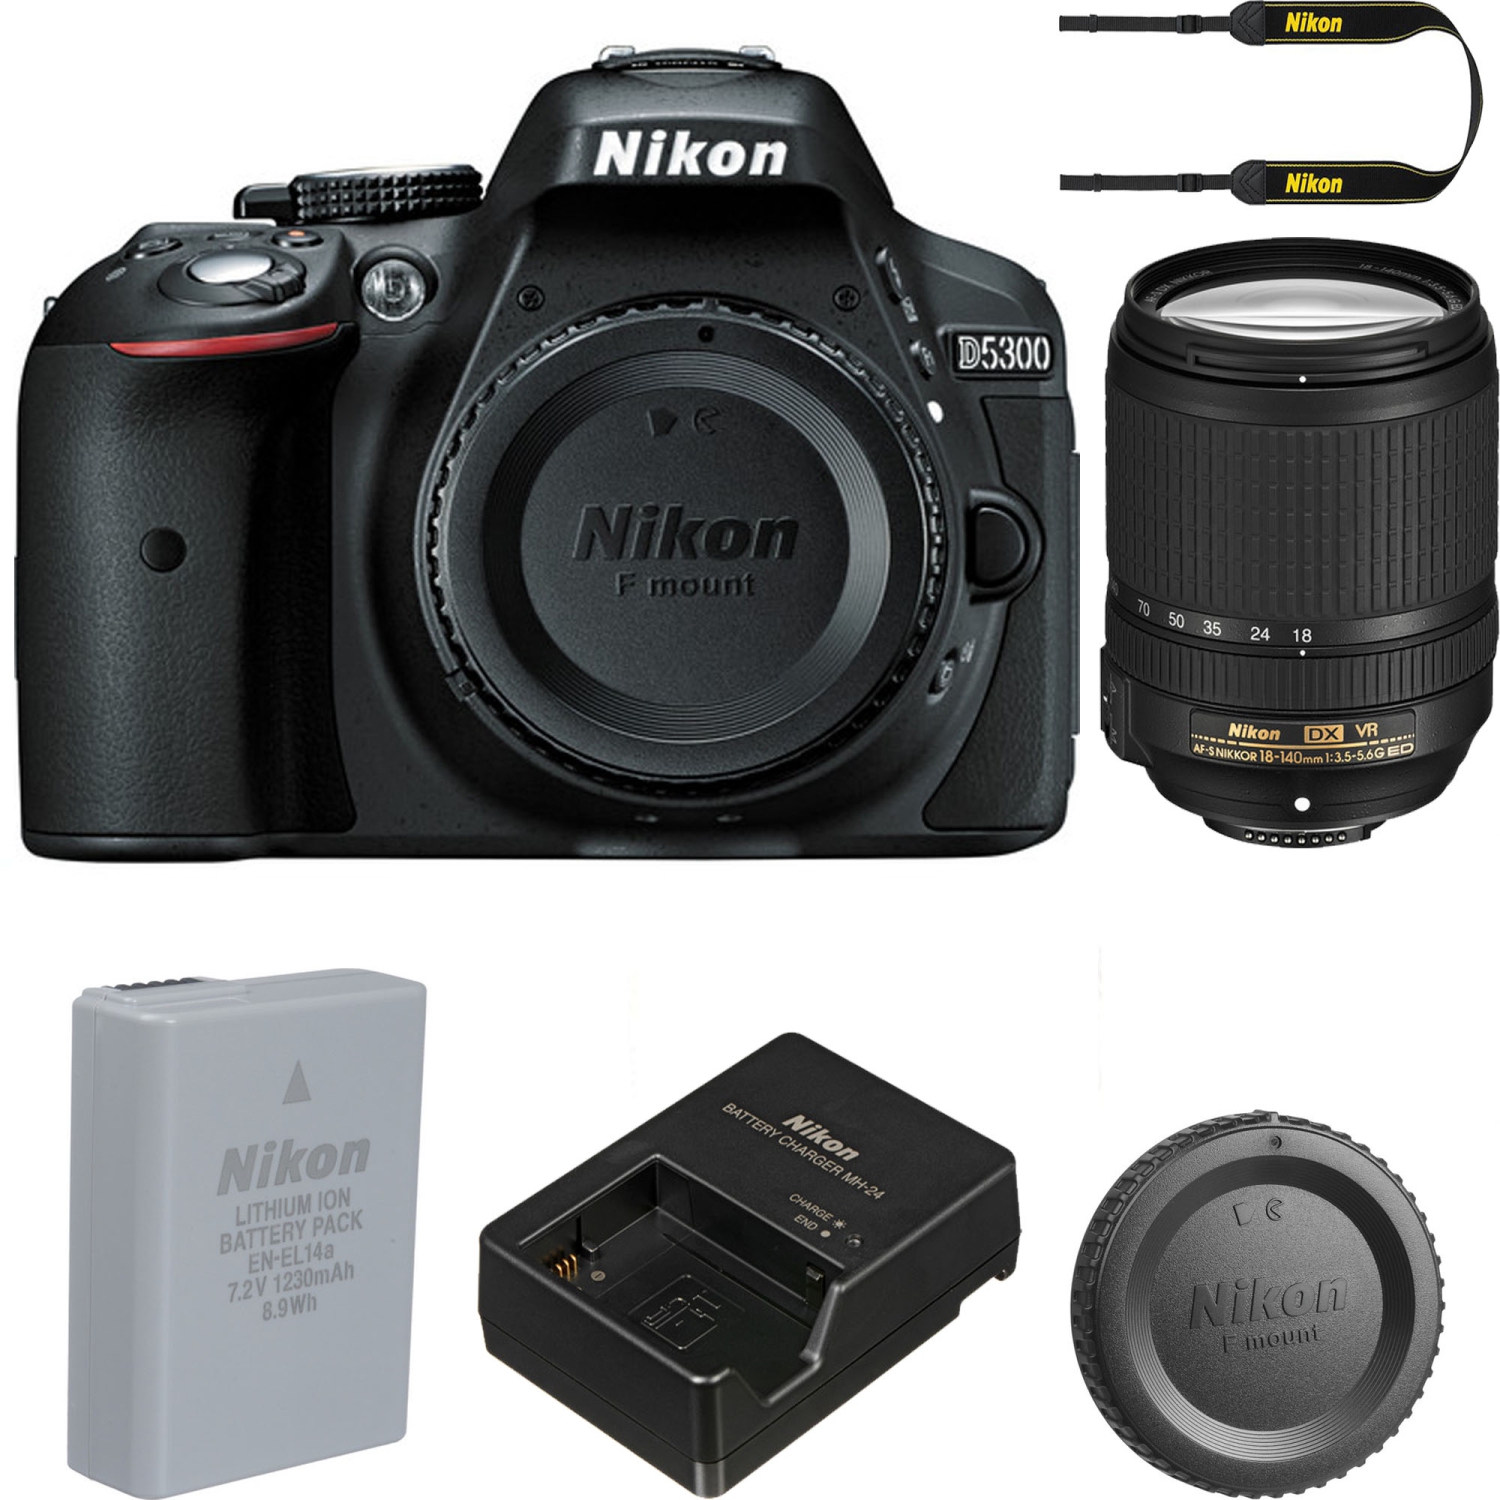 Nikon D5300 Camera with Nikon 18-140mm Lens - Black USA - US Version w/ Seller Warranty